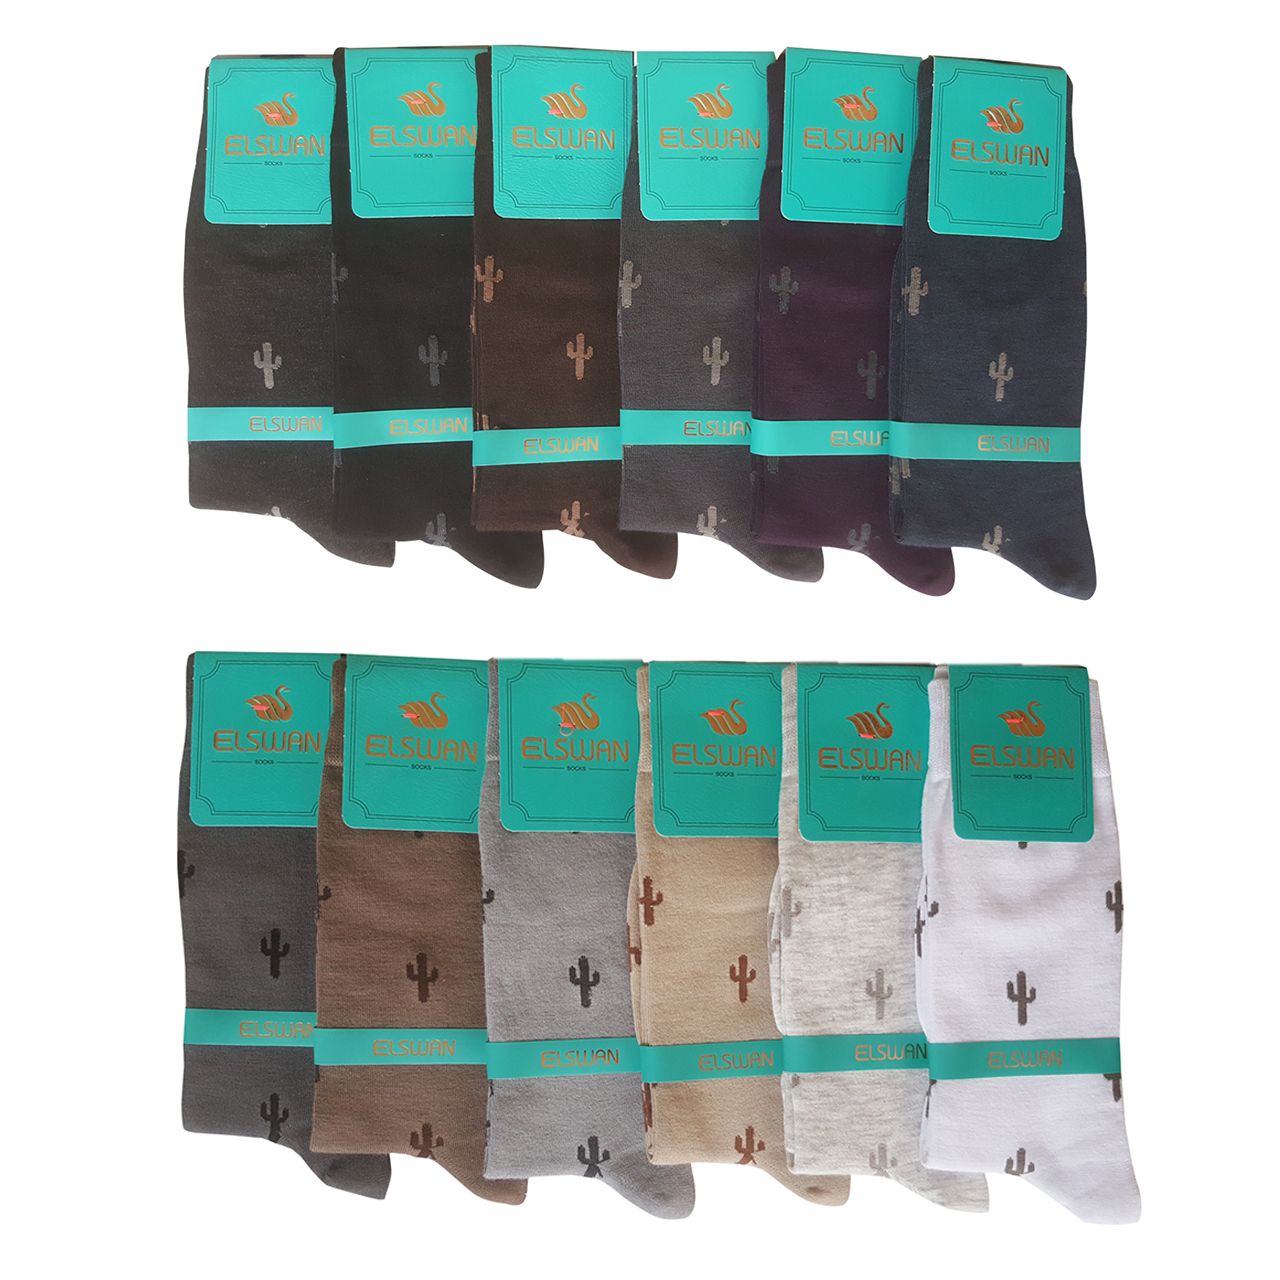 جوراب مردانه ال سون طرح کاکتوس کد PH253 مجموعه 12 عددی -  - 1